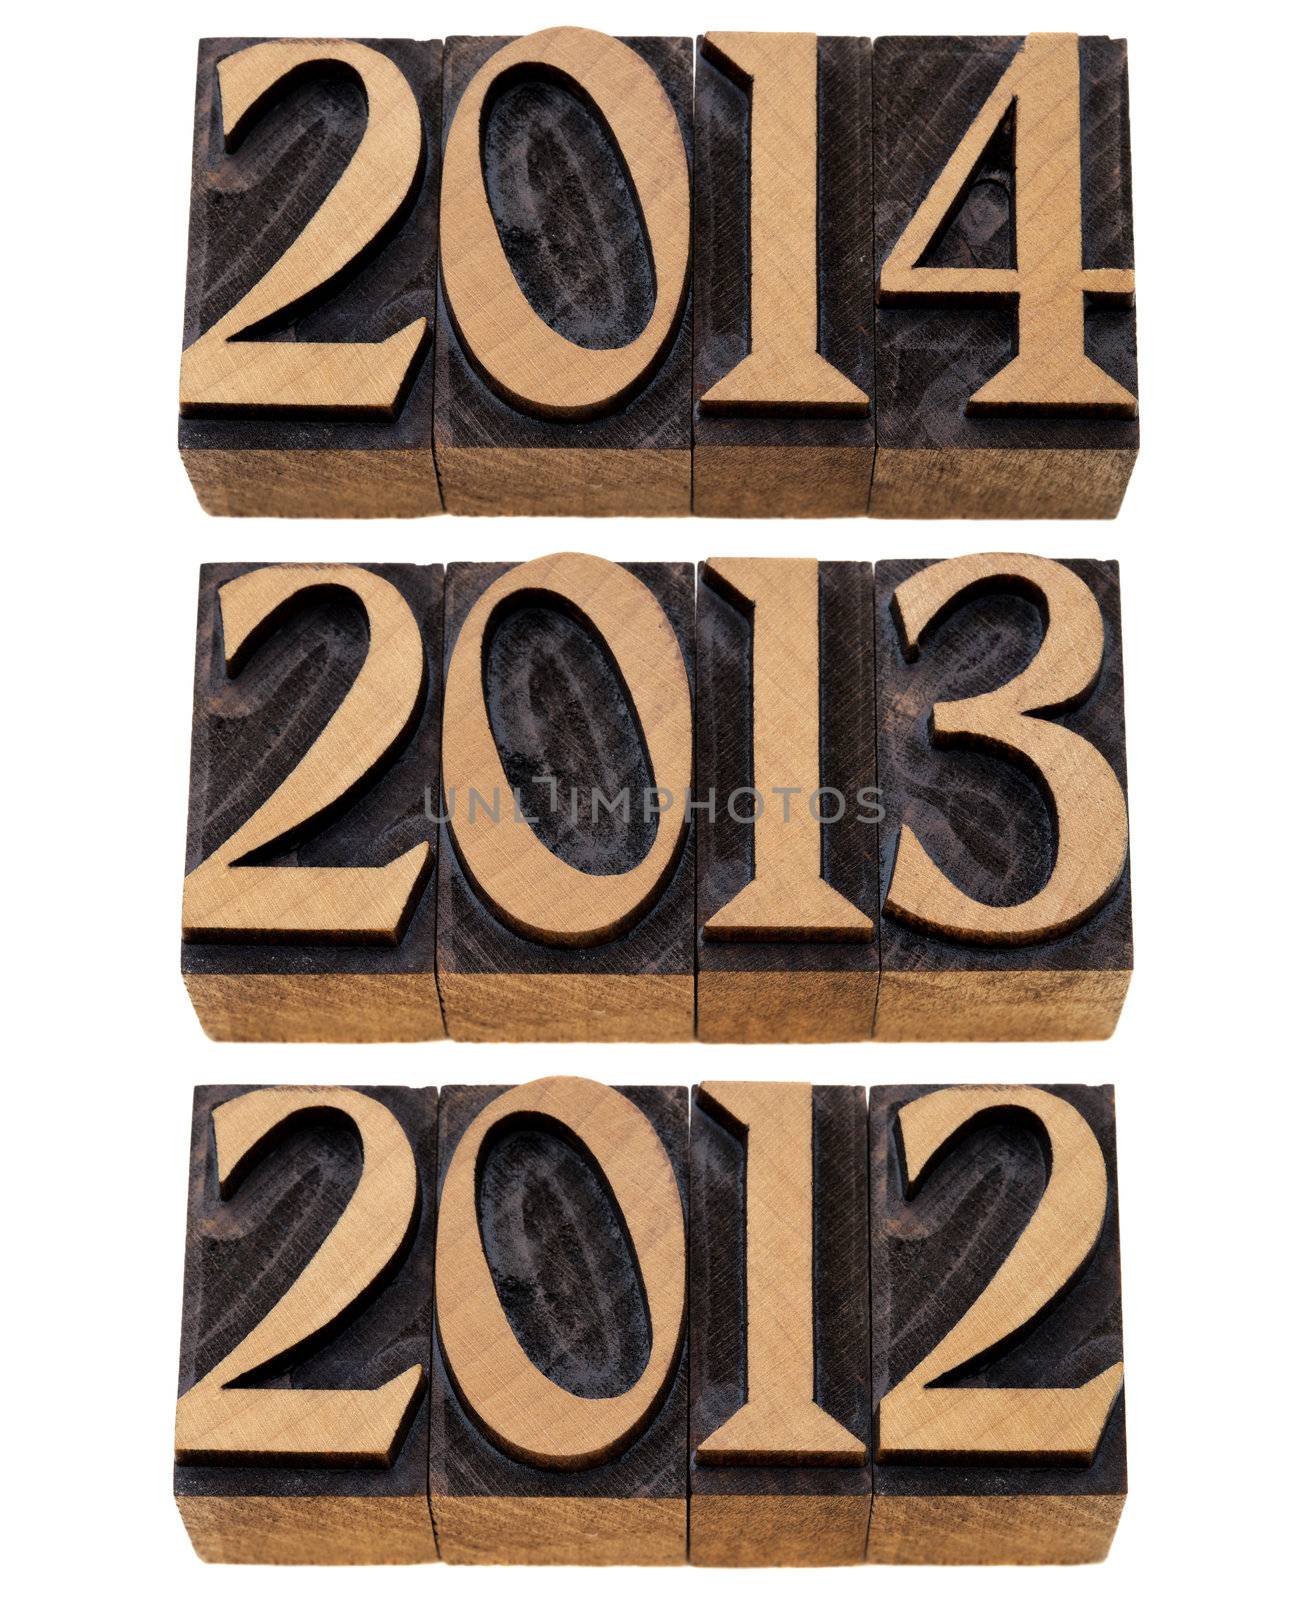 incoming years 2012, 2013, 2014 - isolated numbers in vintage wood printing blocks